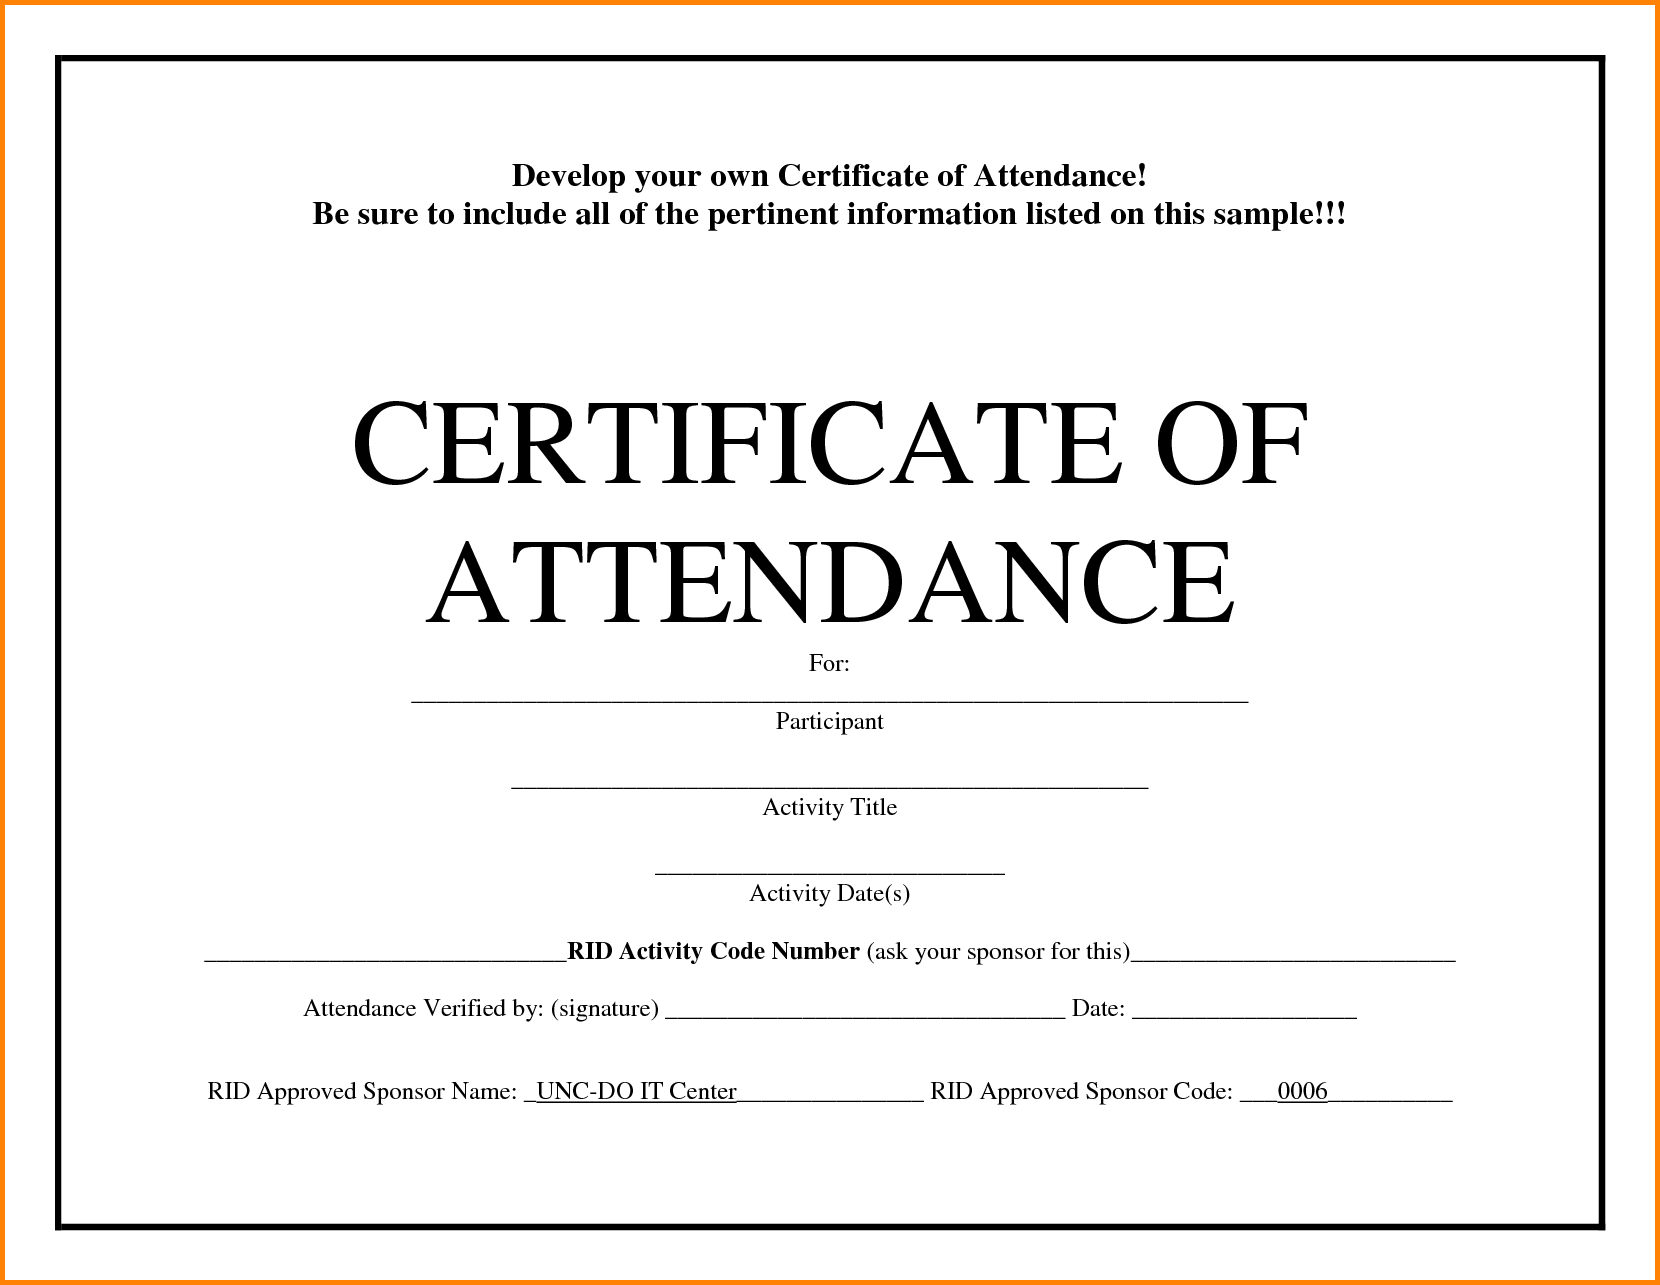 Certificate of attendance template